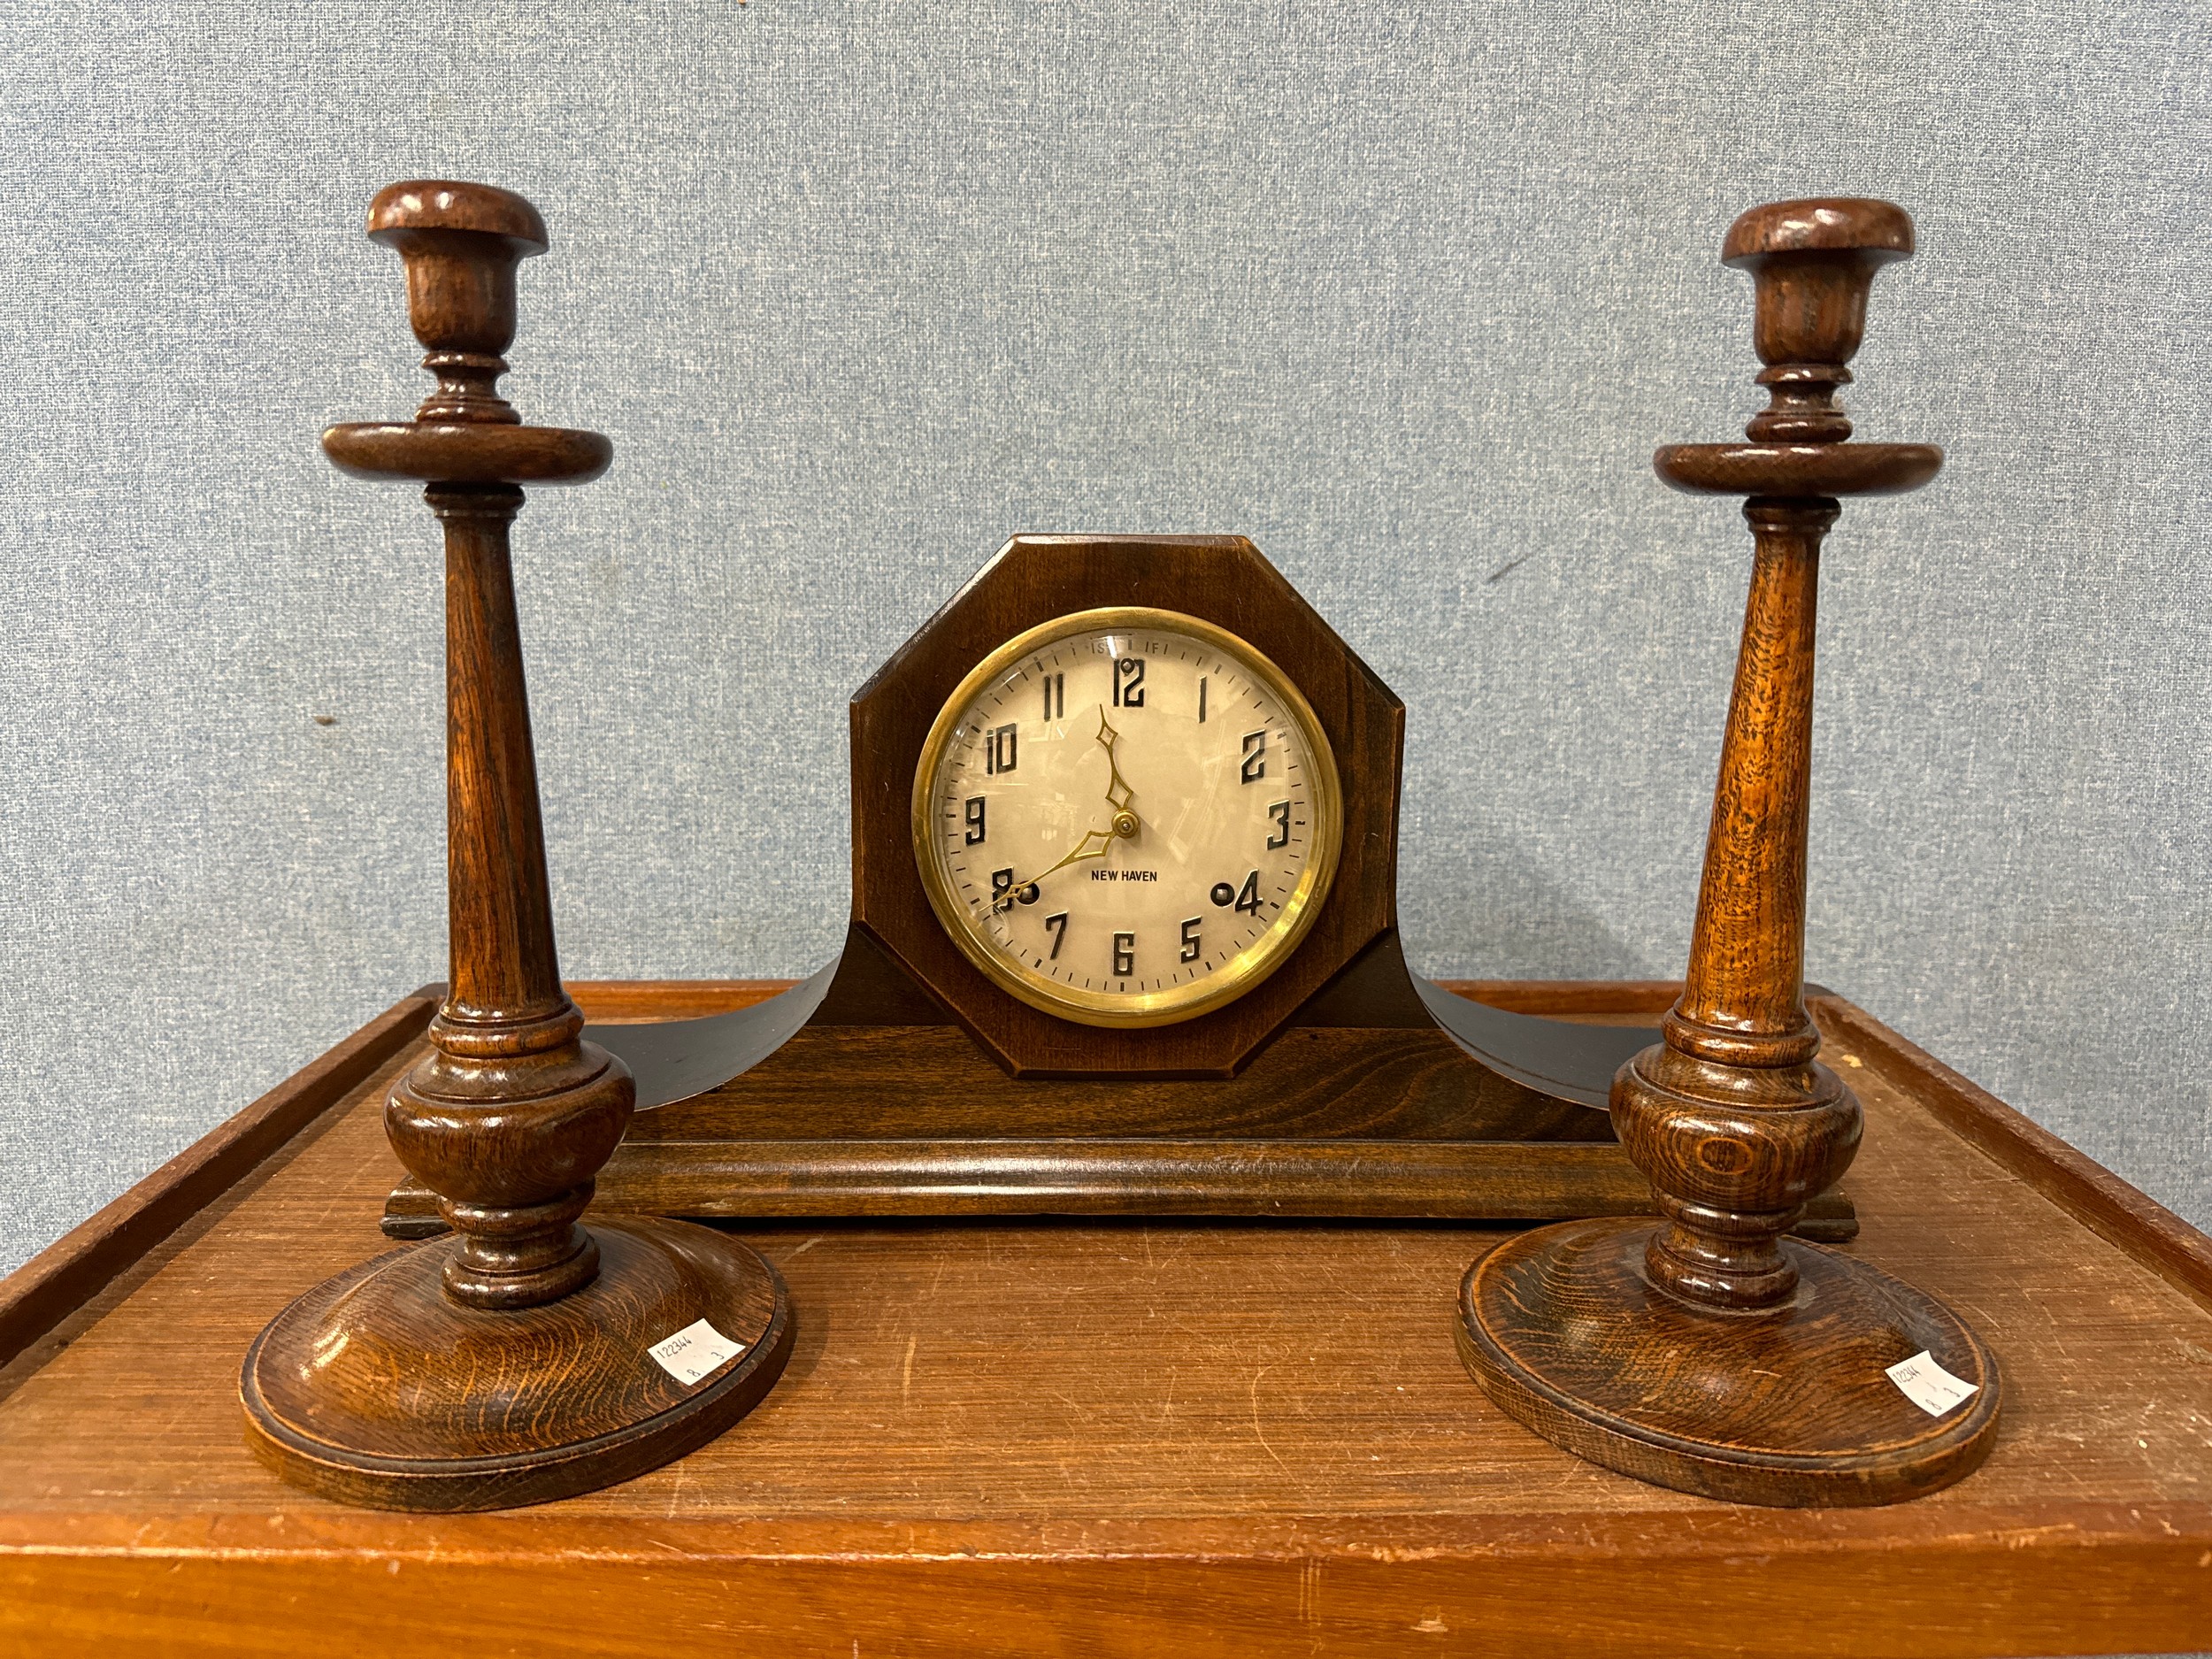 A pair of oak candlesticks and a mantel clock